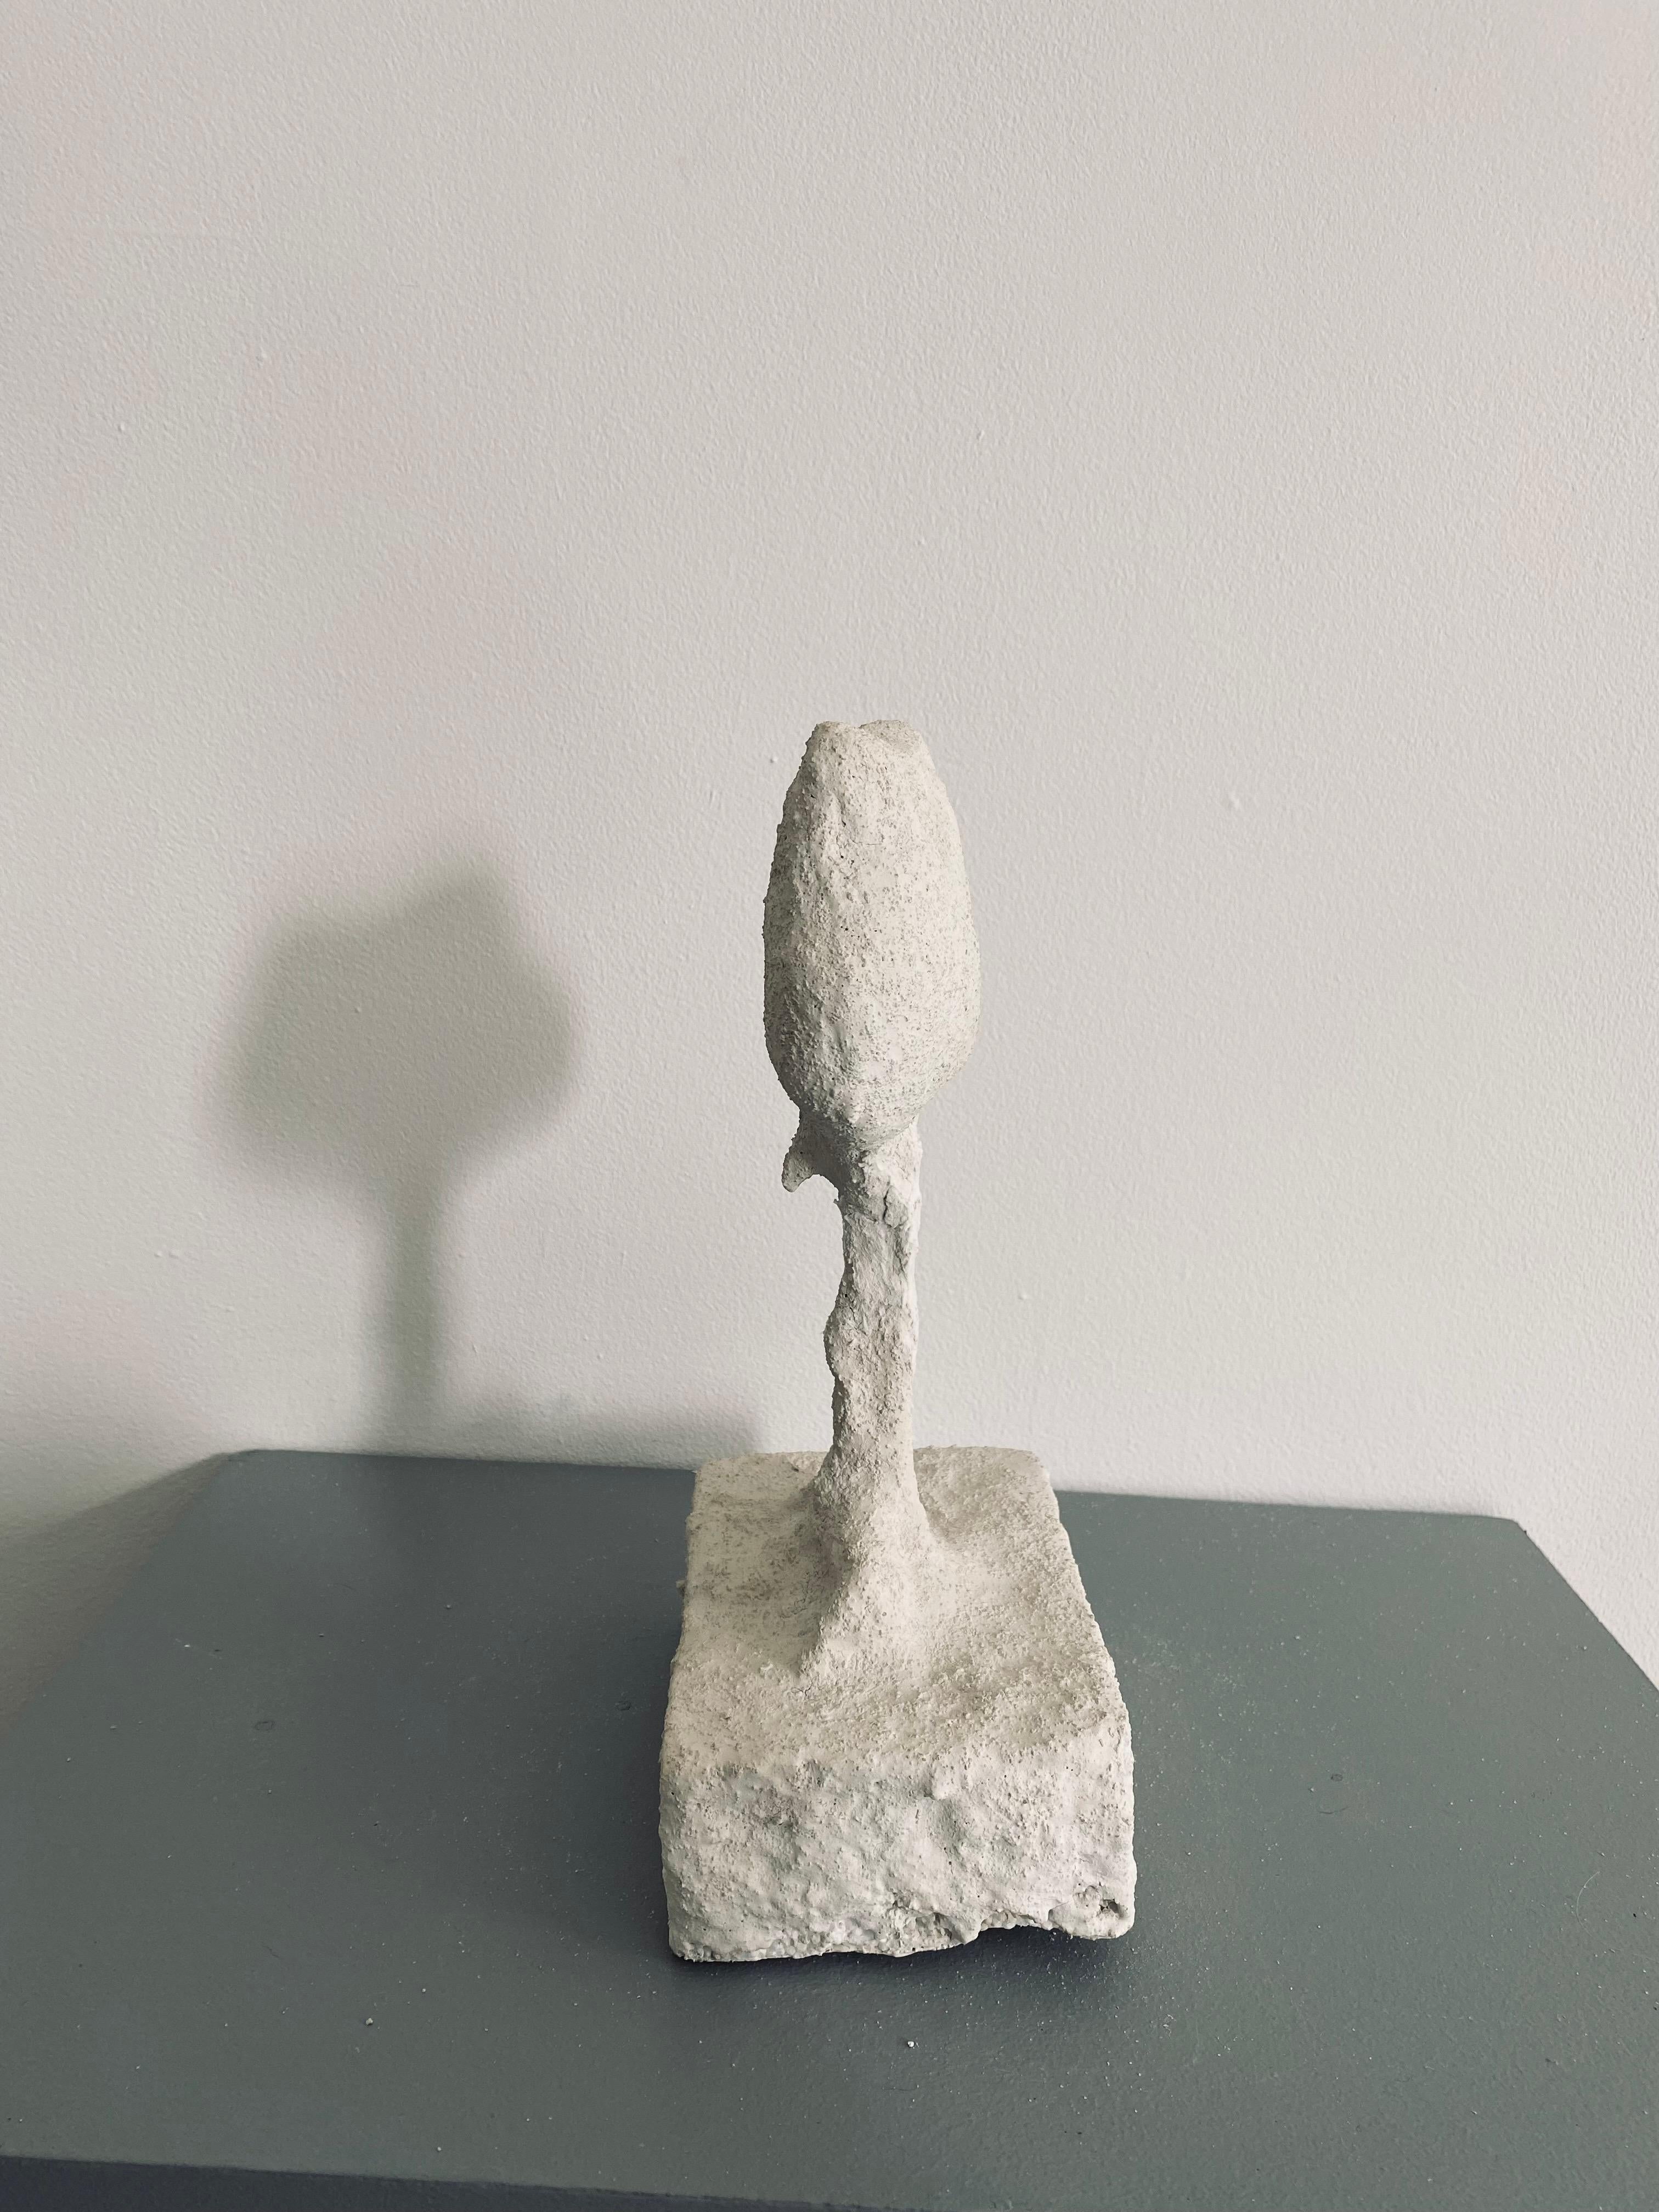 Petite sculpture de totem en ciment : « La tribu n° 9 » - Contemporain Mixed Media Art par Ivy Naté